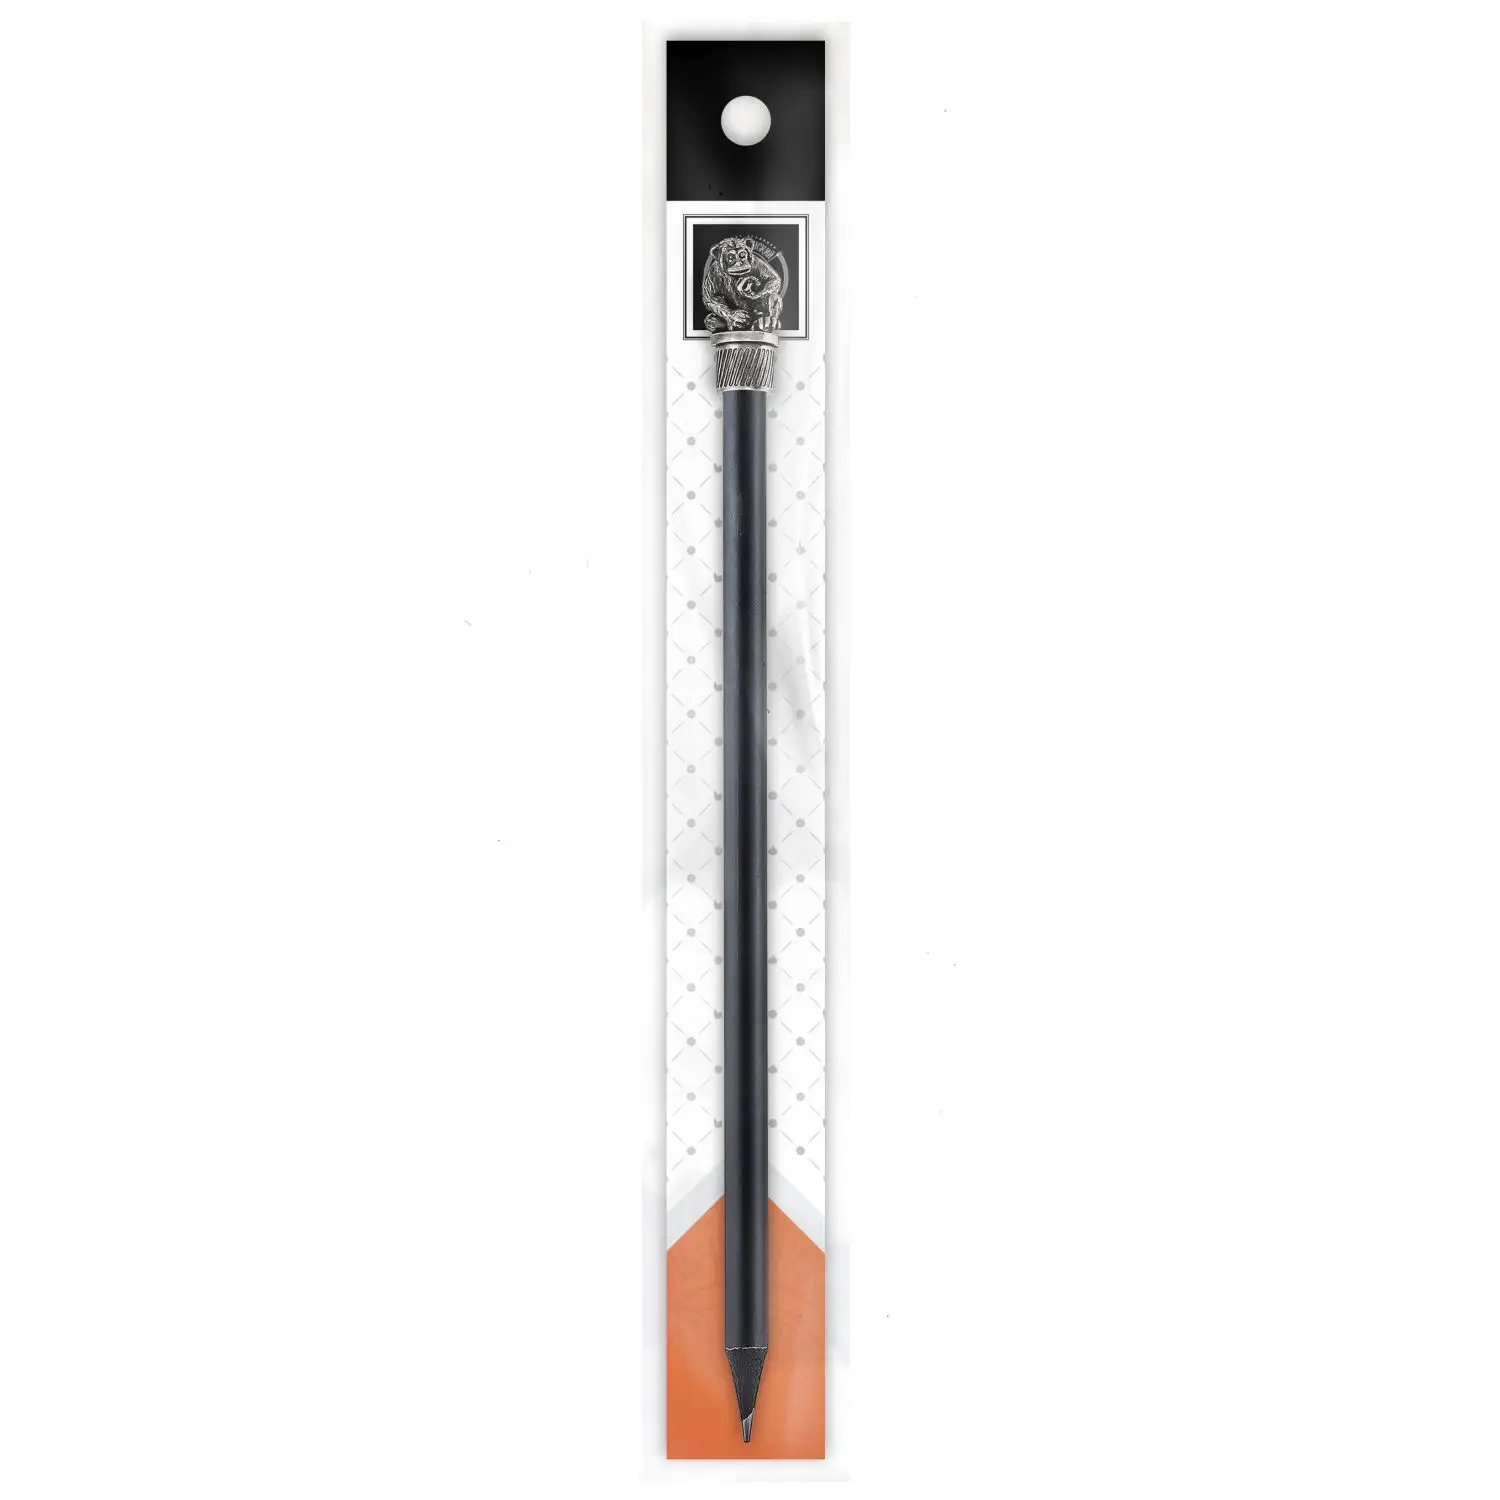 Карандаш Сафари-Обезьяна латунный посеребренный с чернением карандаш самовар латунный посеребренный с чернением